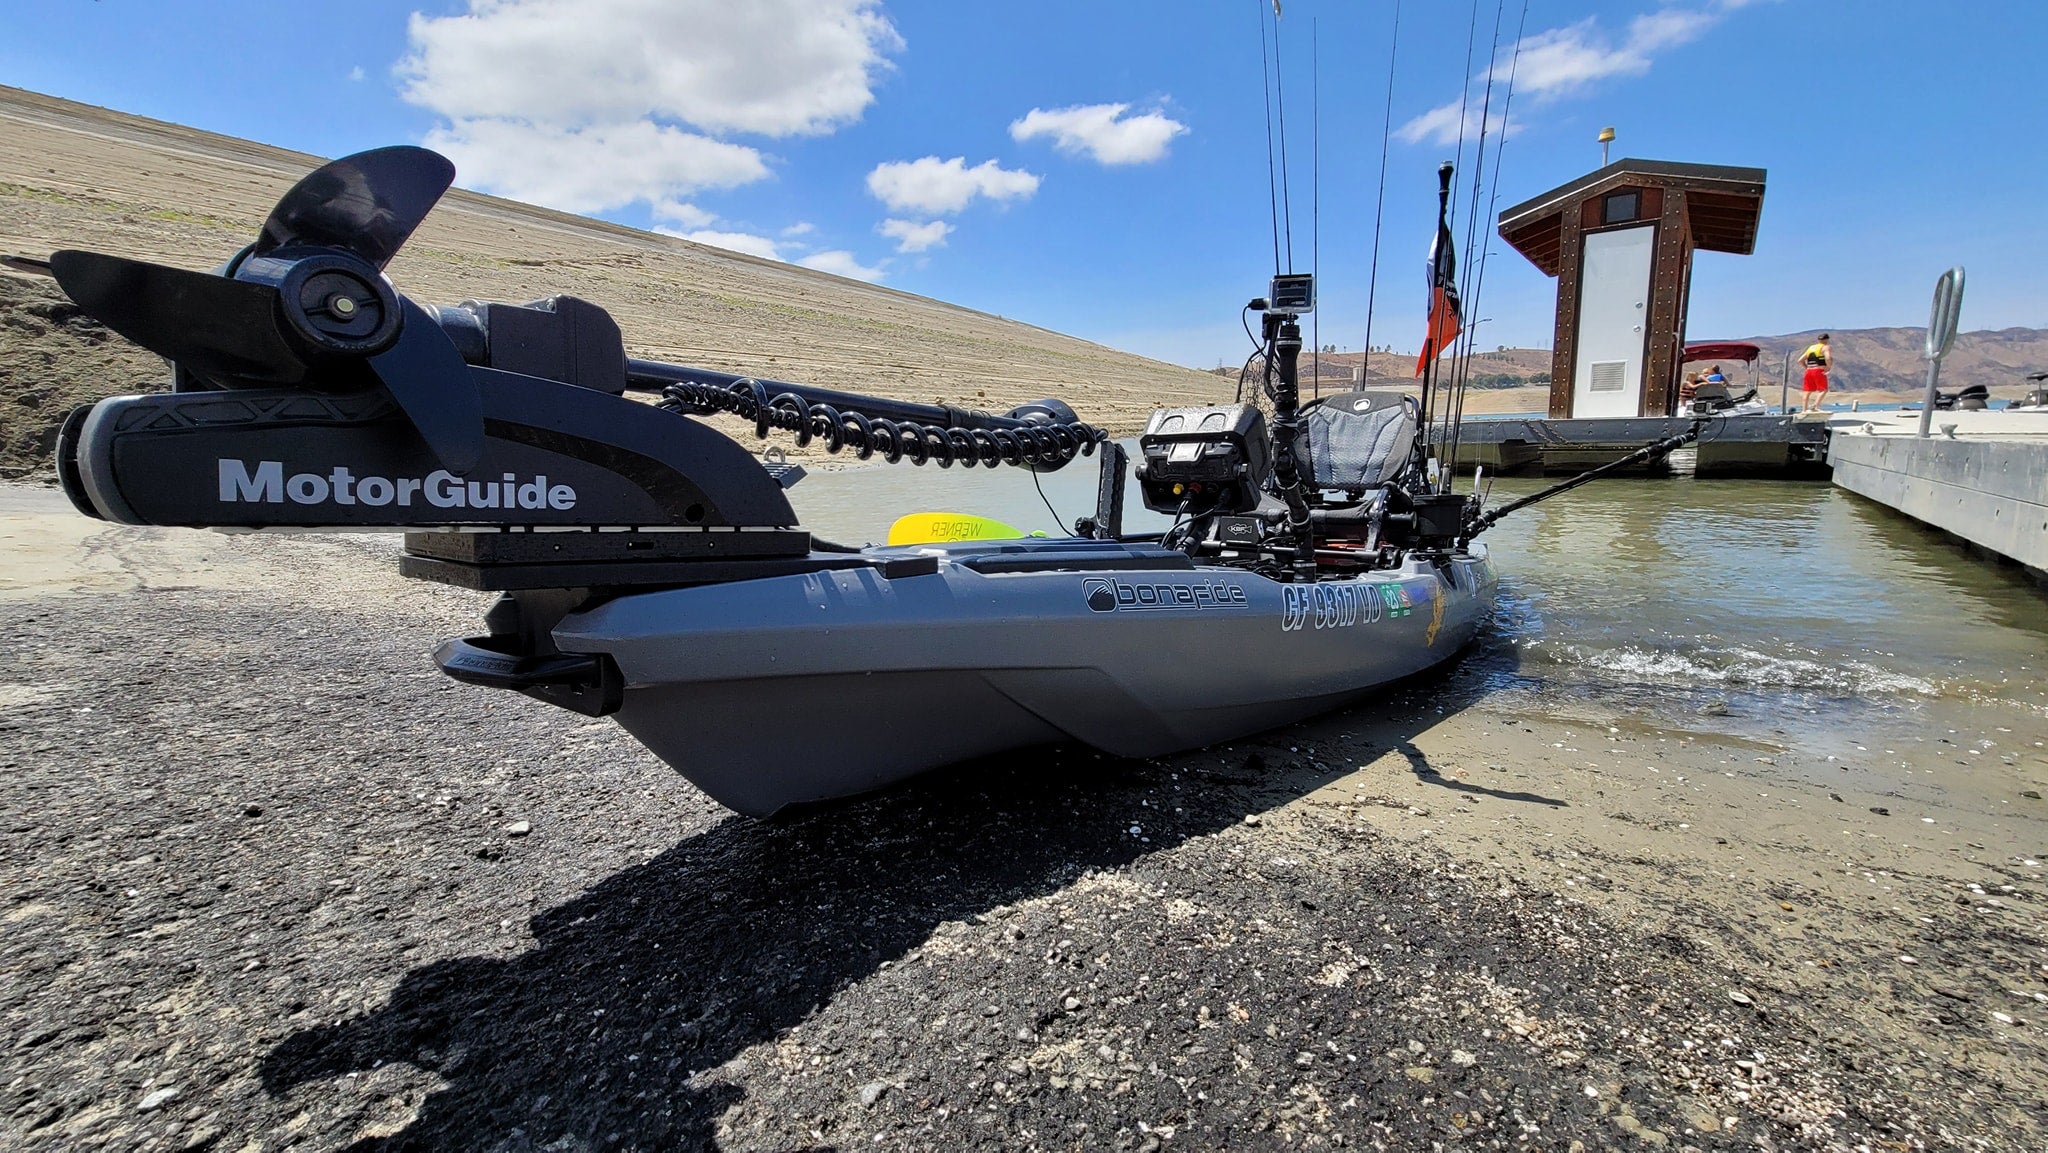 Bonafide SS127 kayak with Motorguide Xi3 Trolling motor on bow